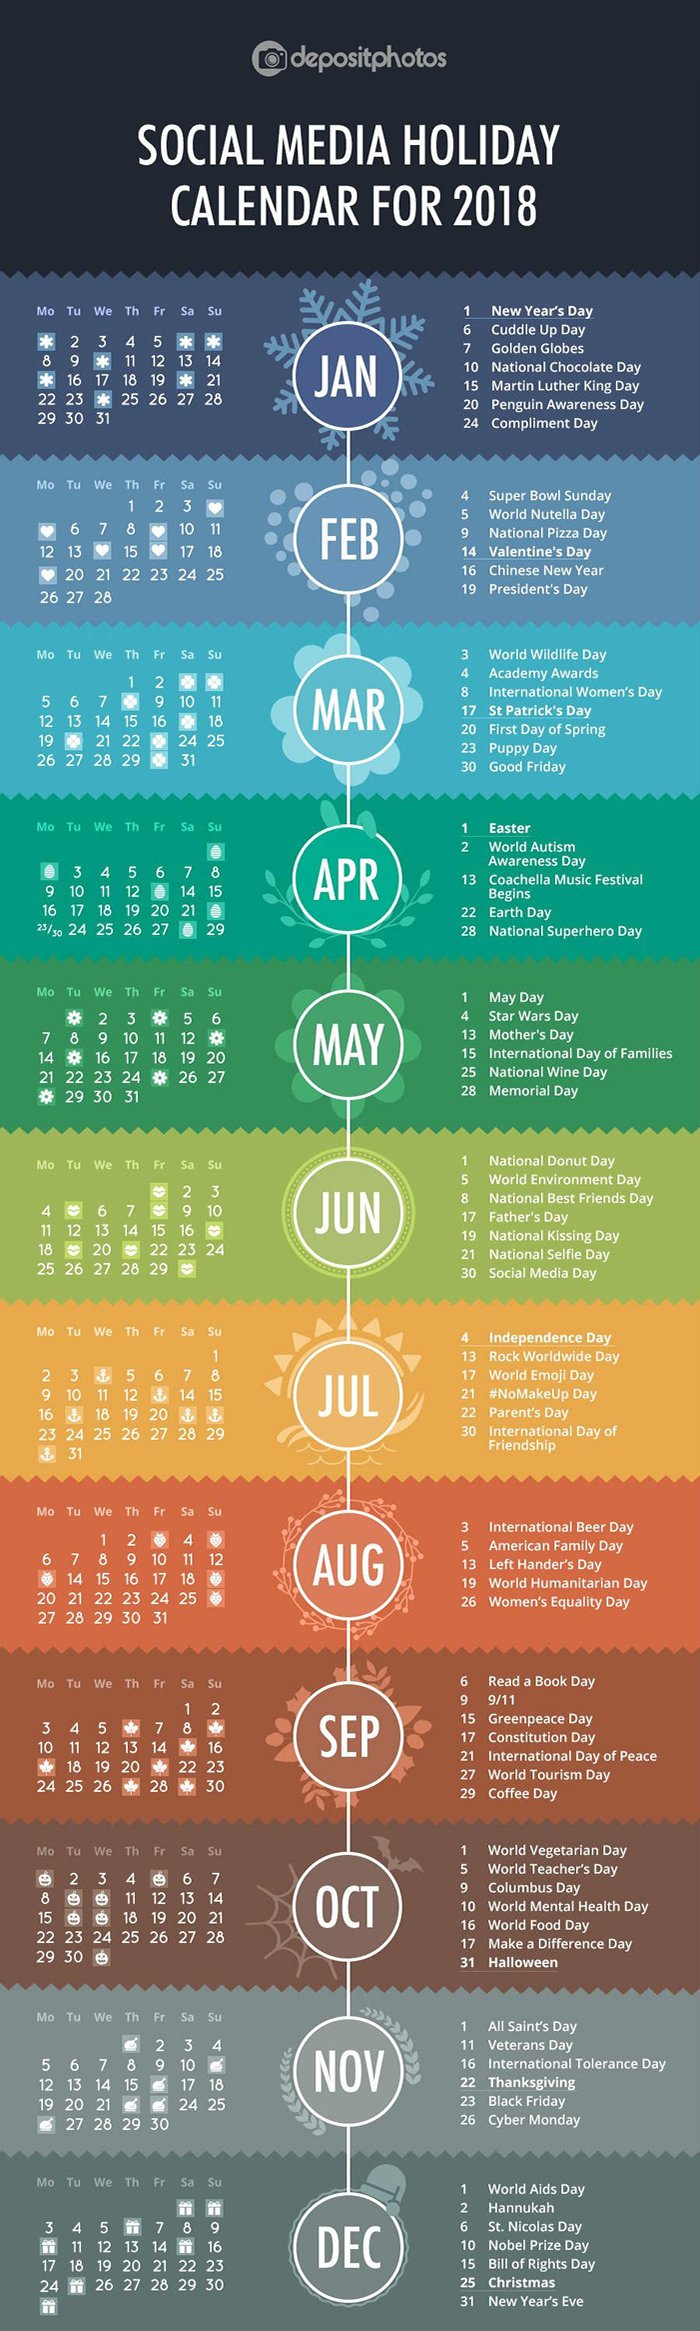 Social Media Holiday Calendar For 2018